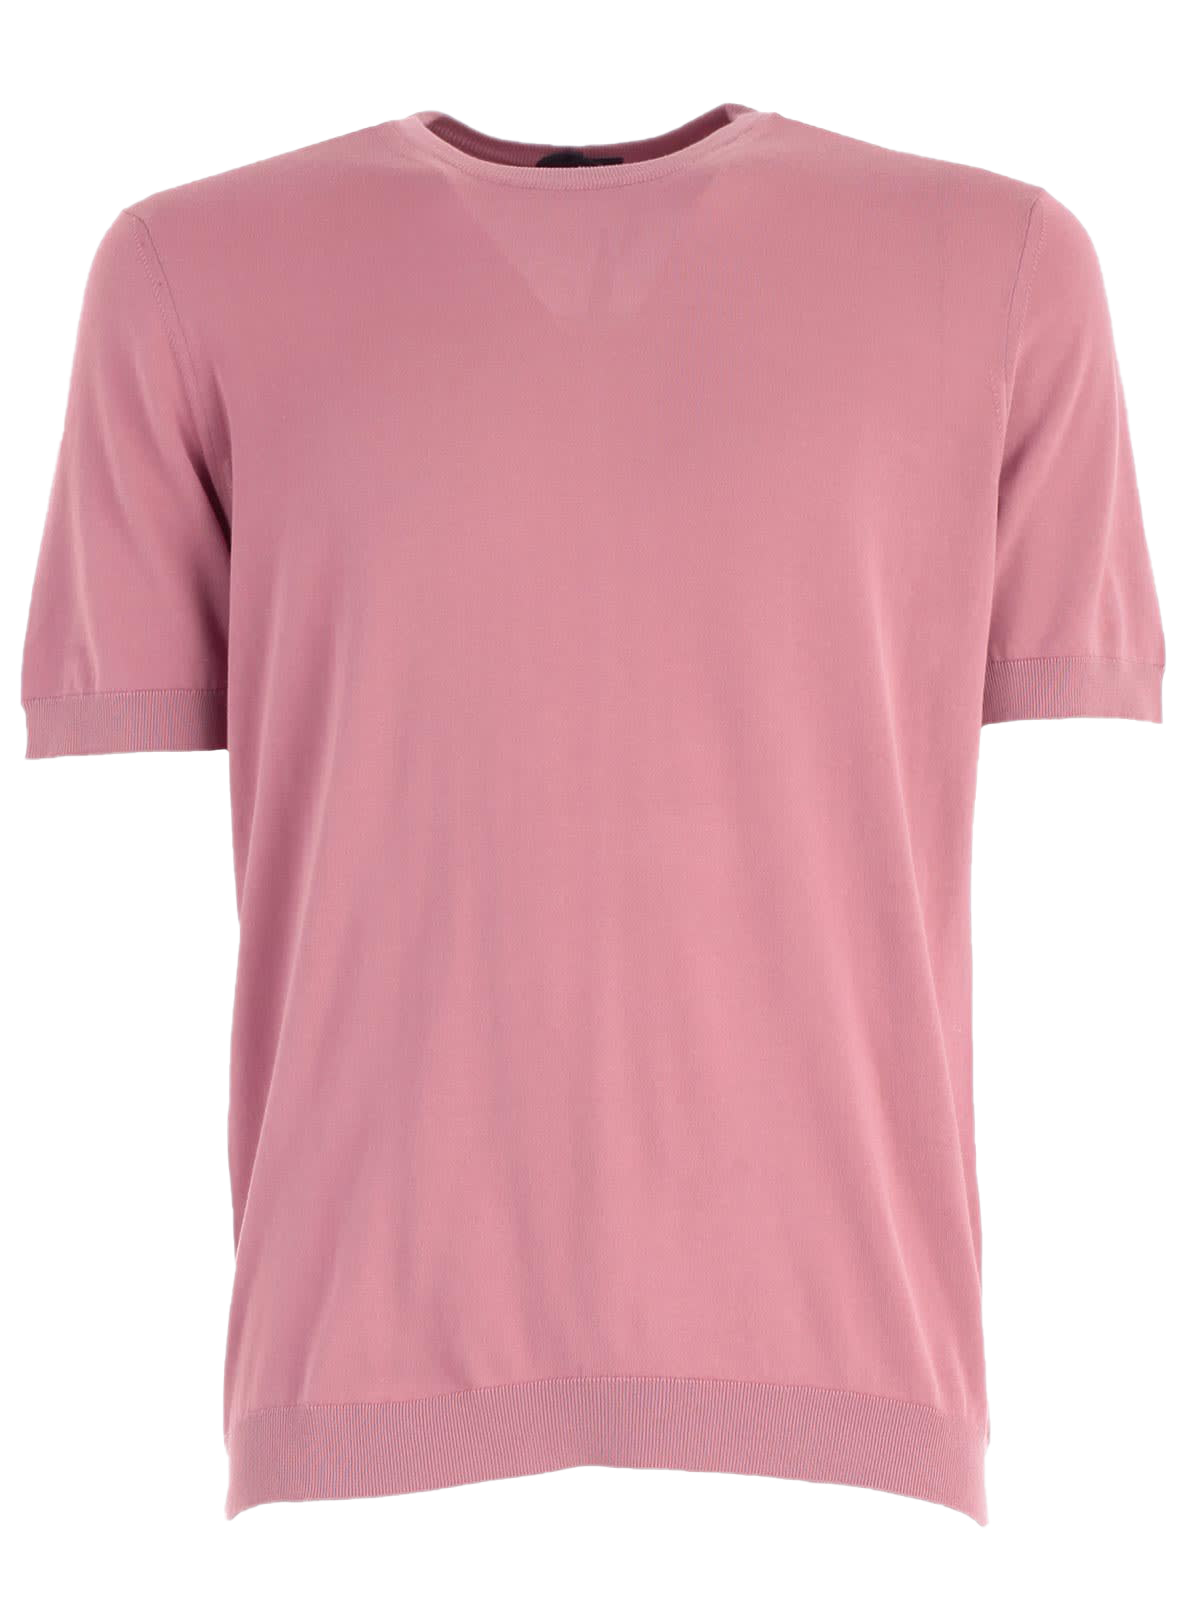 Plain Pink T-Shirt PNG Free Download